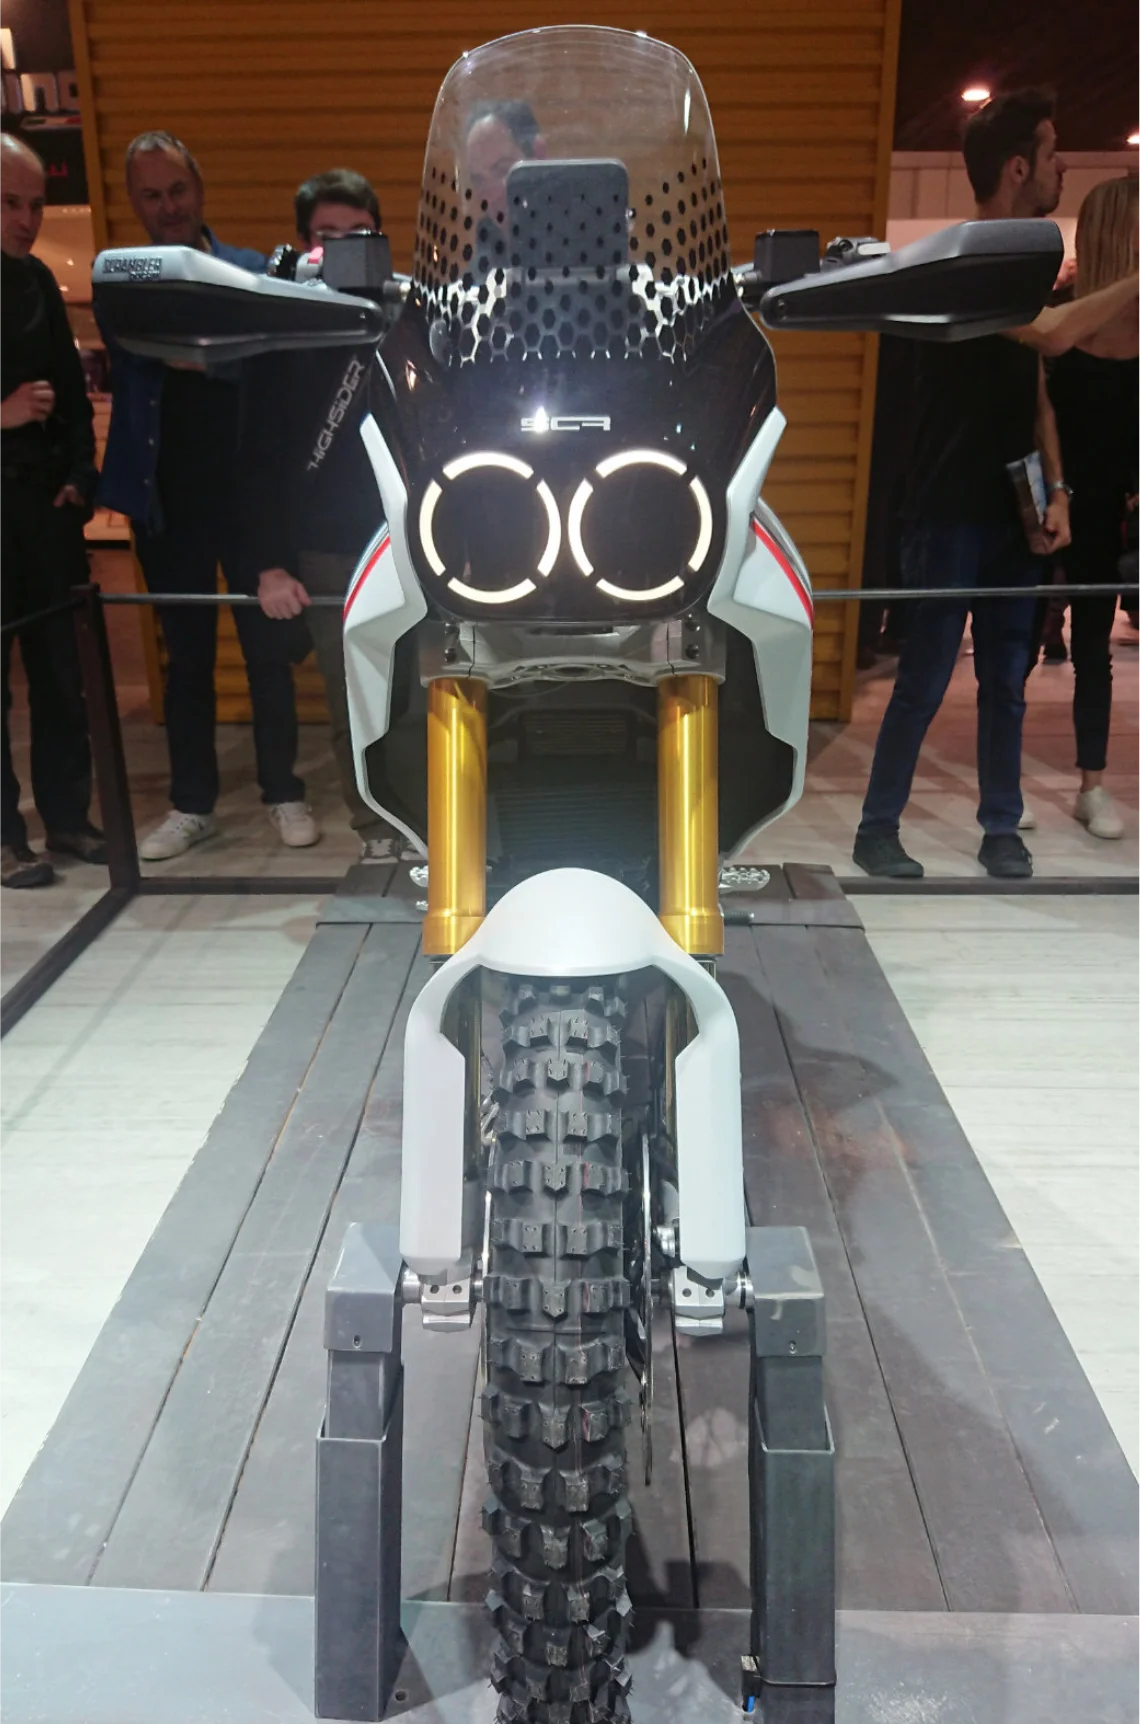 Ducati Scrambler Desert X concept